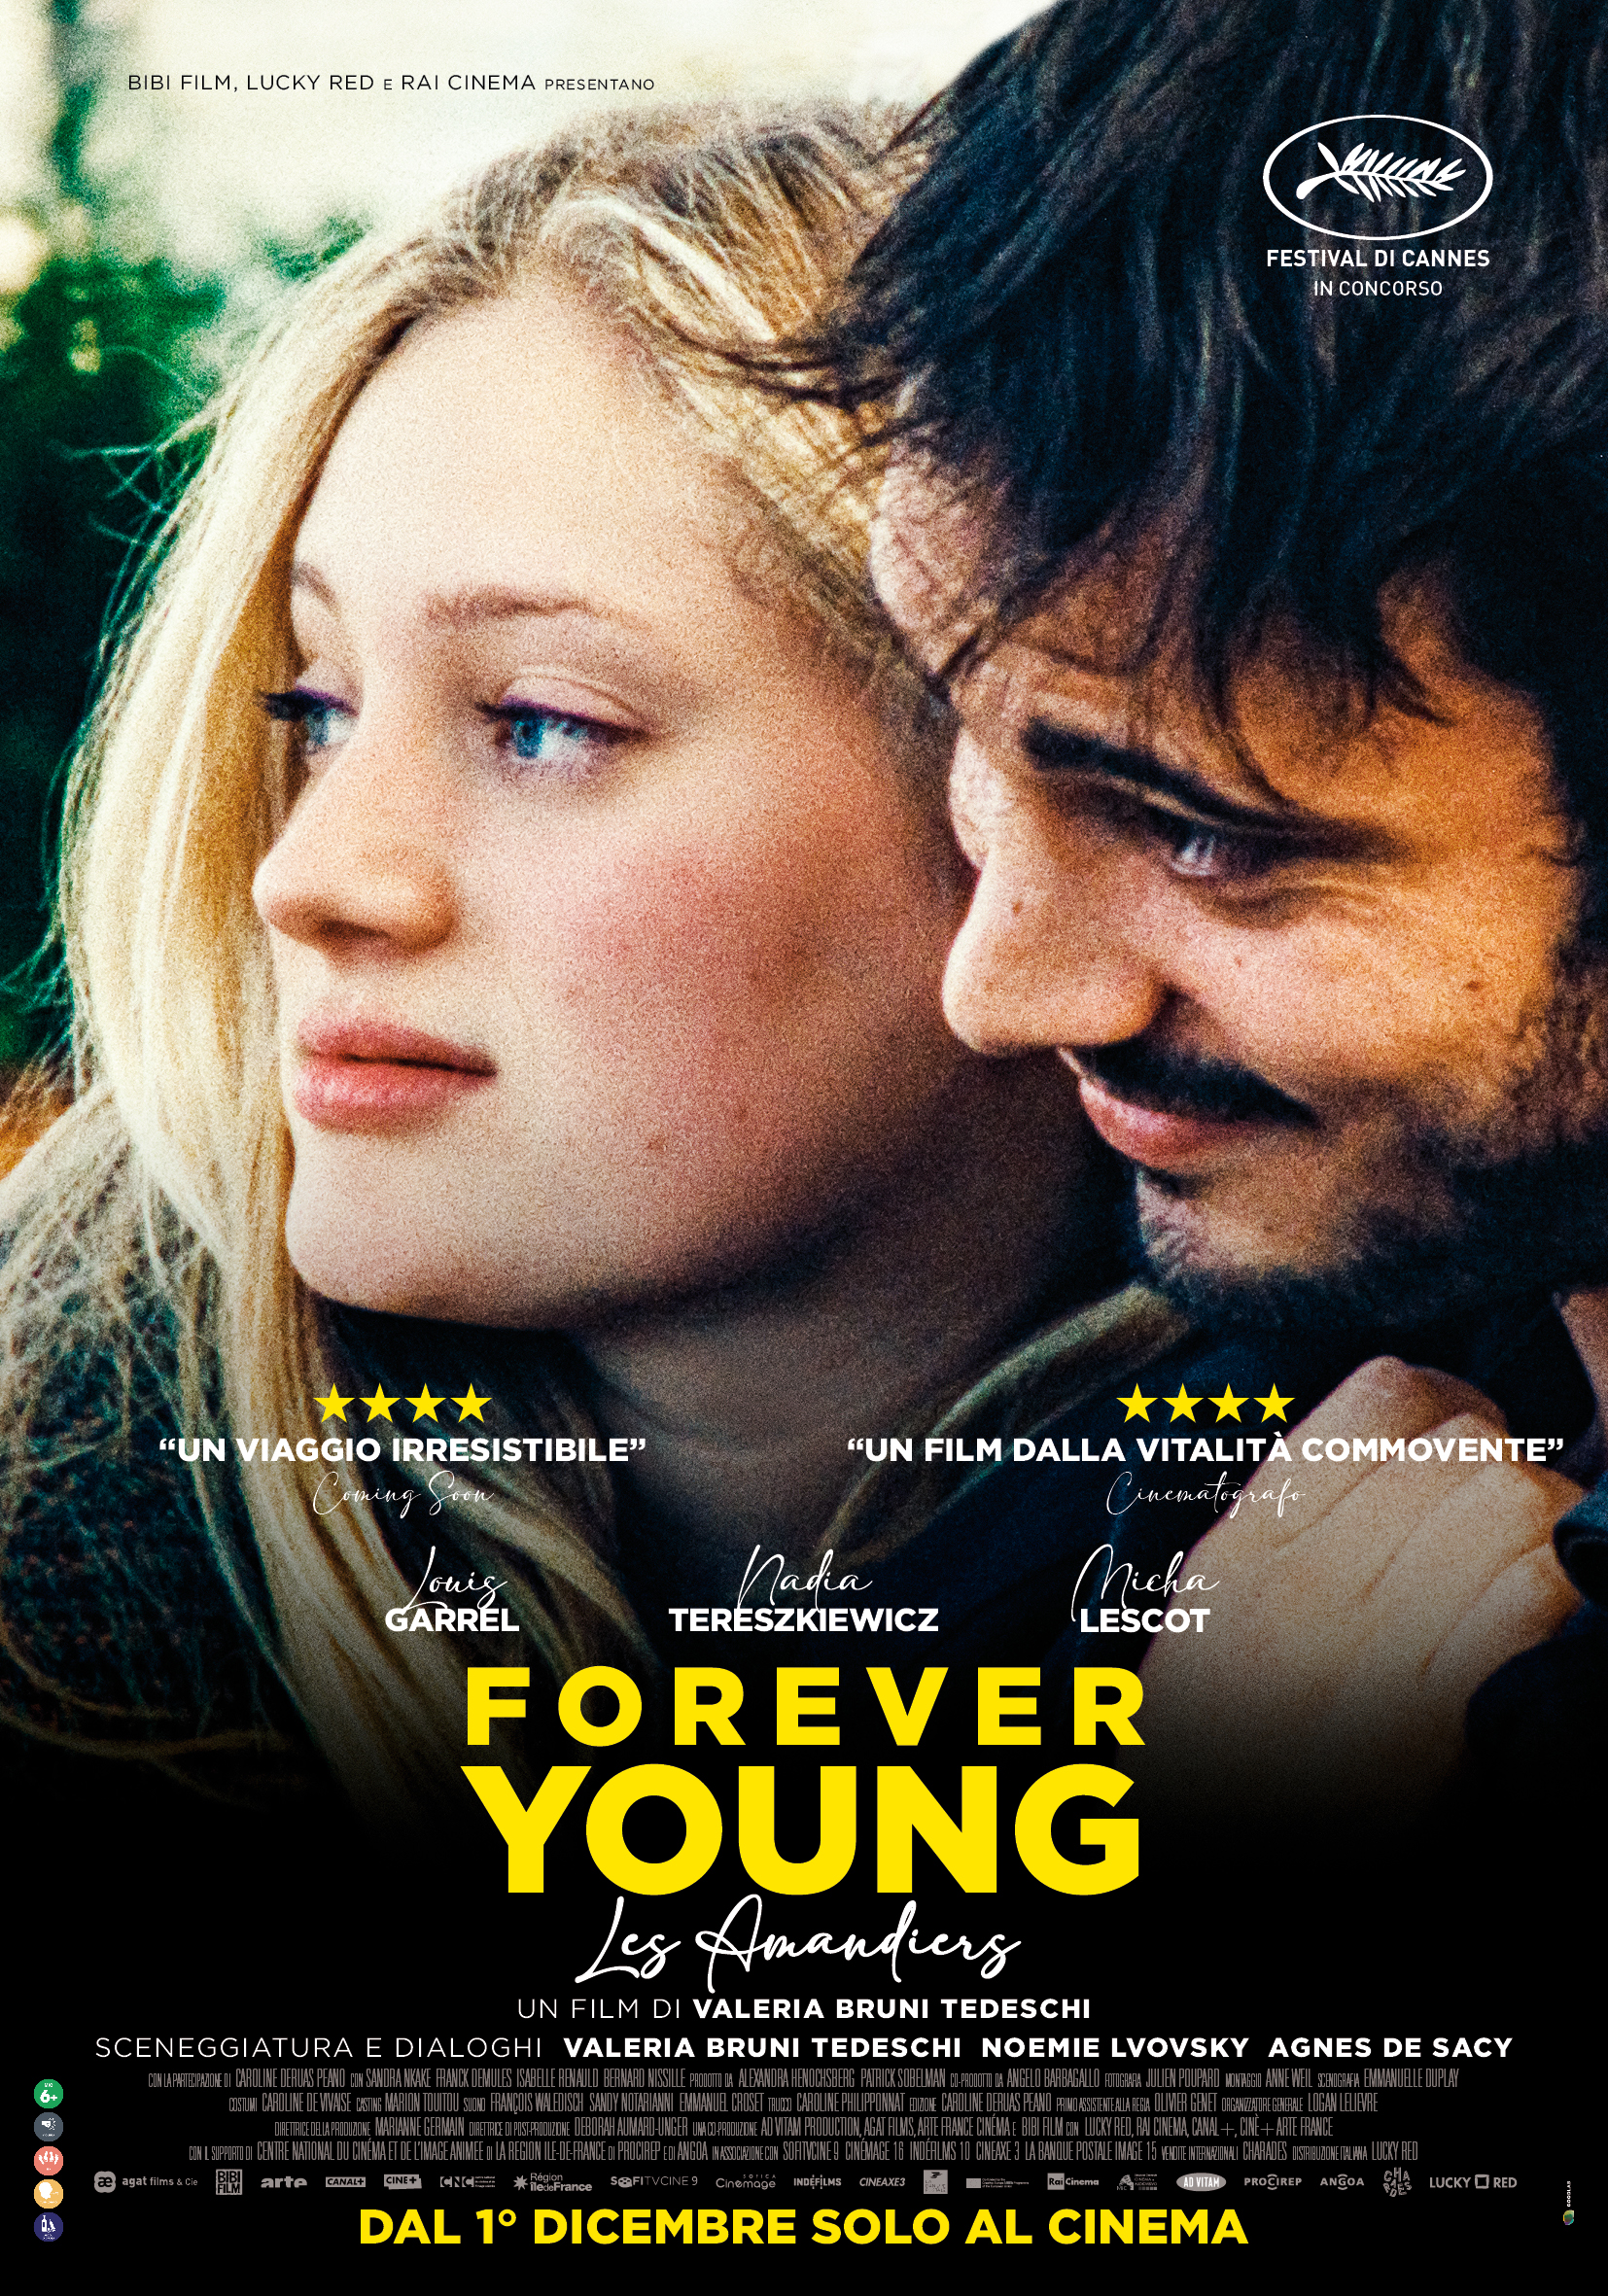 La locandina del film Forever Young di Valeria Bruni Tedeschi 